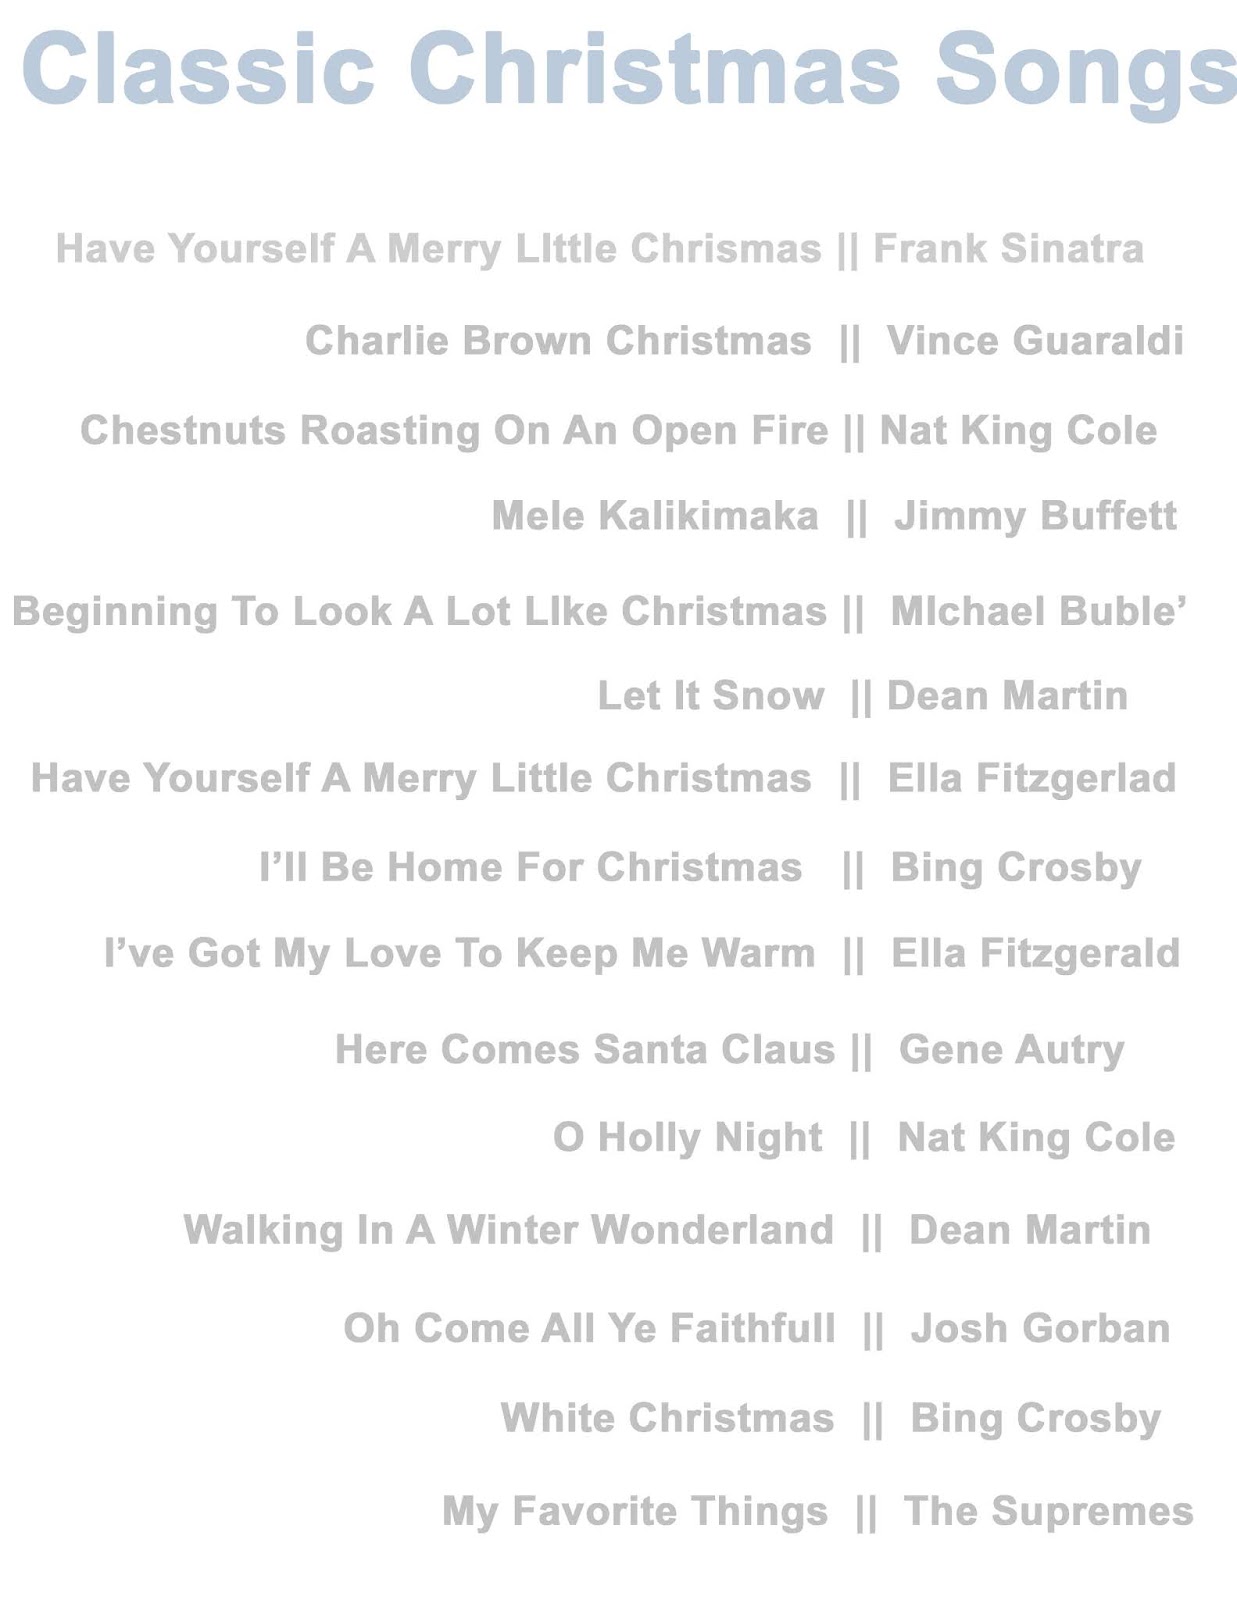 Christmas songs list